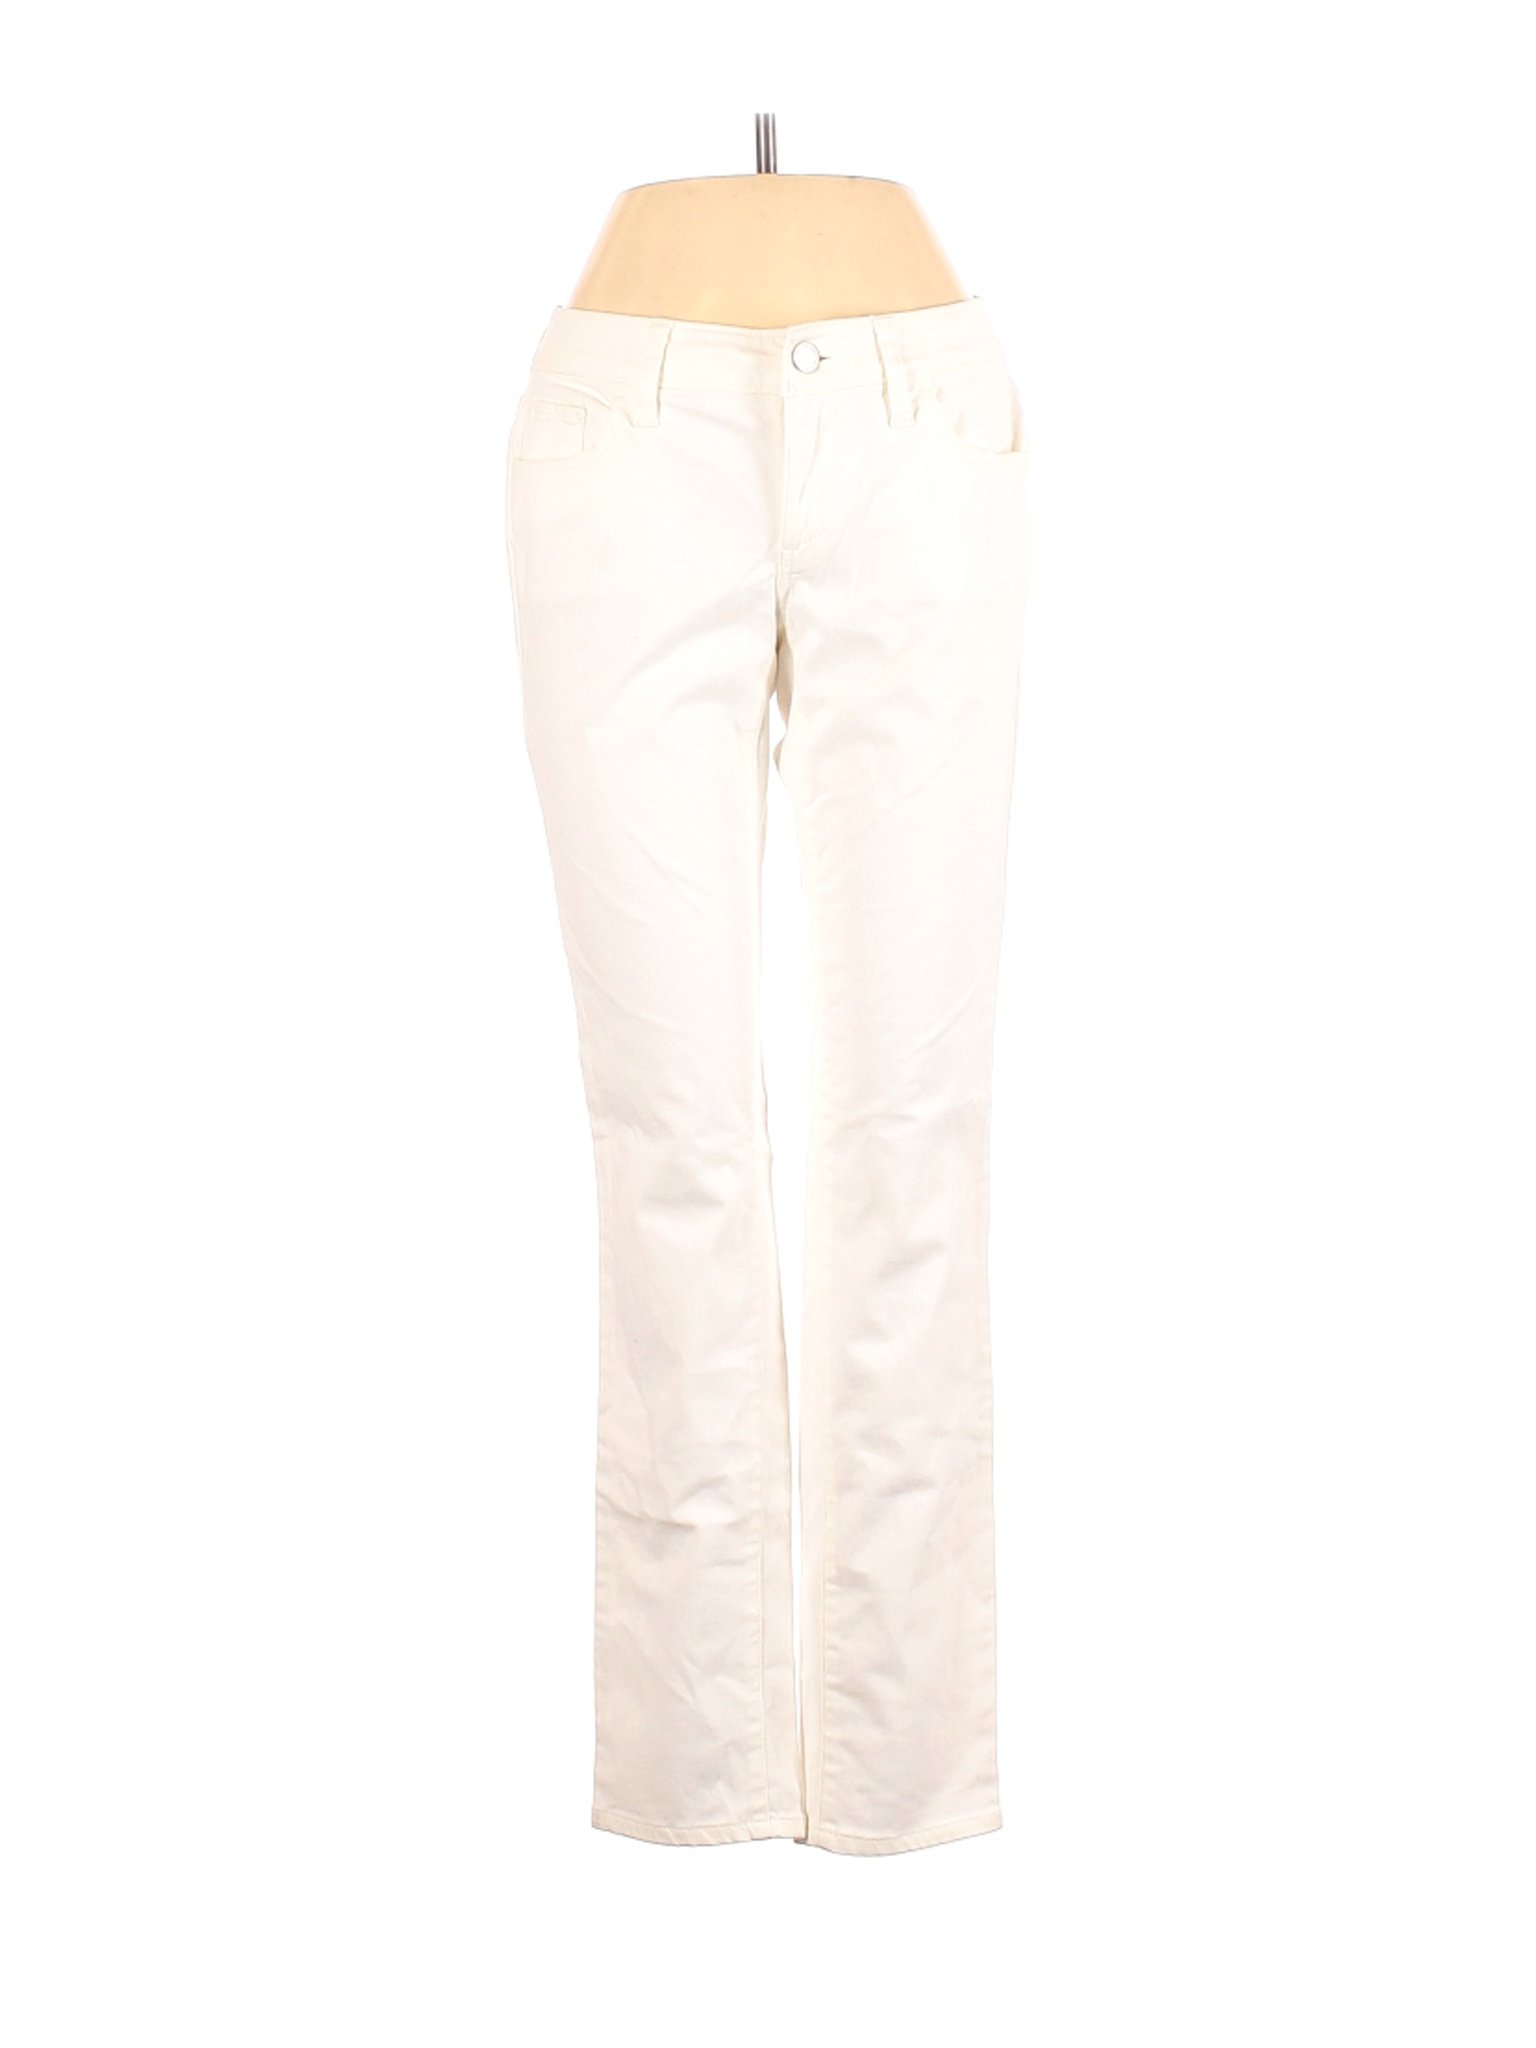 NWT Ann Taylor Factory Women Ivory Jeans 00 Petites | eBay